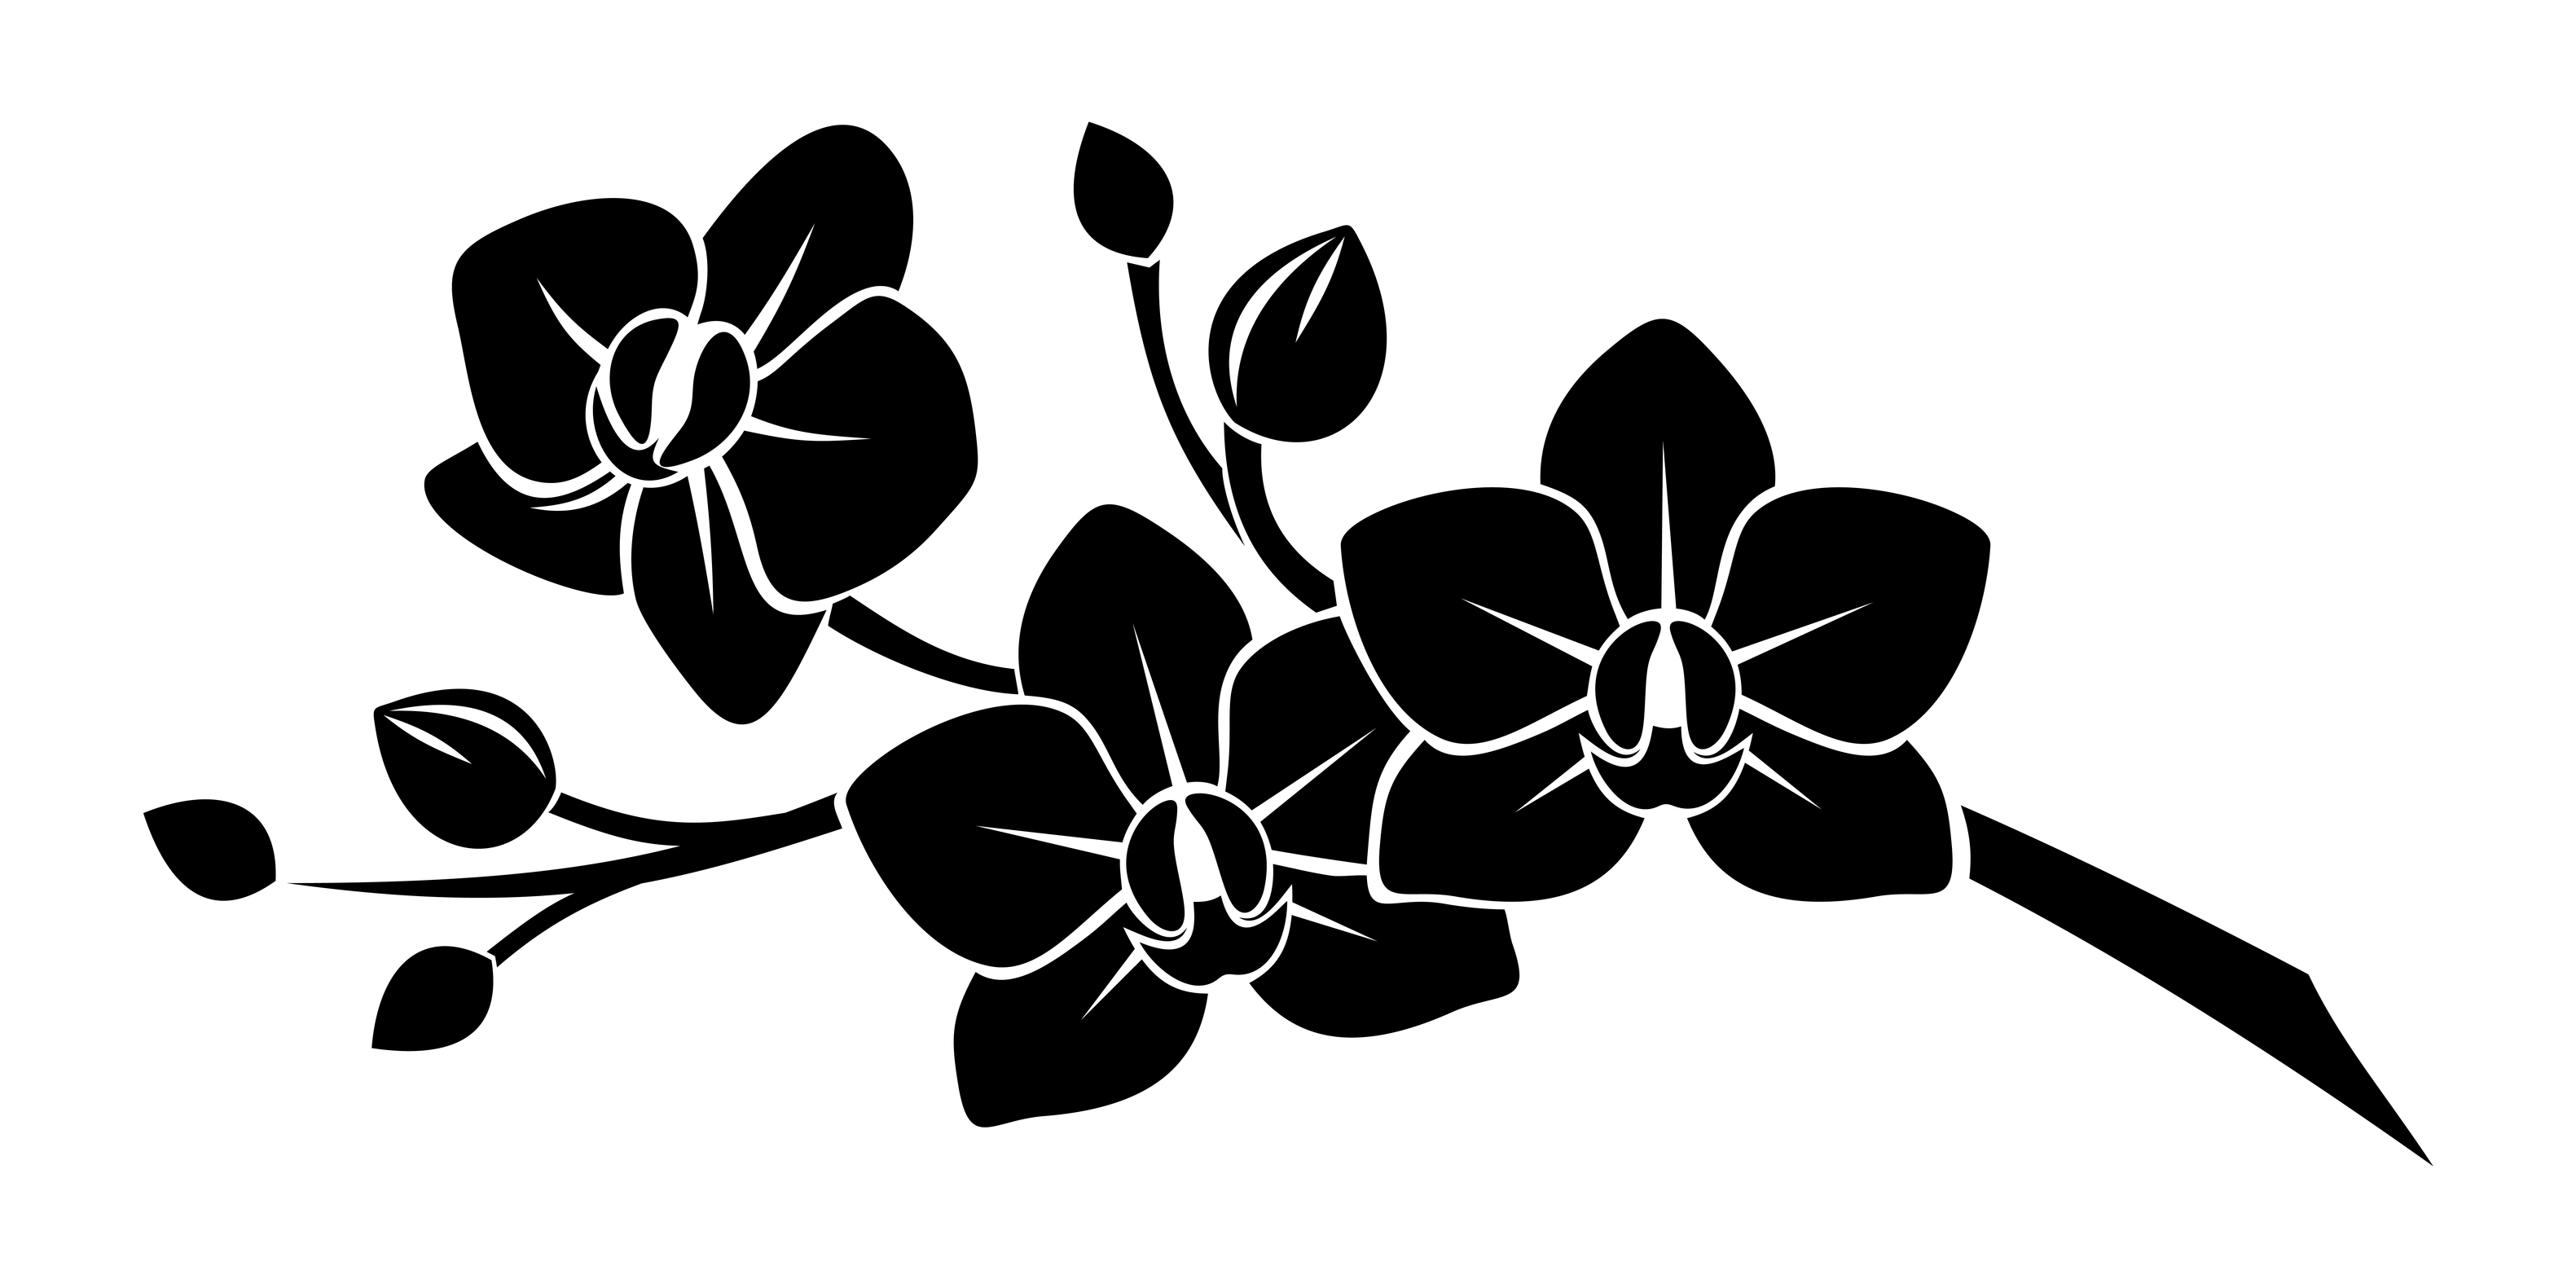 Cattleya Orchid flower set on white background. Single flower, leaf and  stem. Stem is vector pattern brush. Black and white illustration. 21553644  Vector Art at Vecteezy